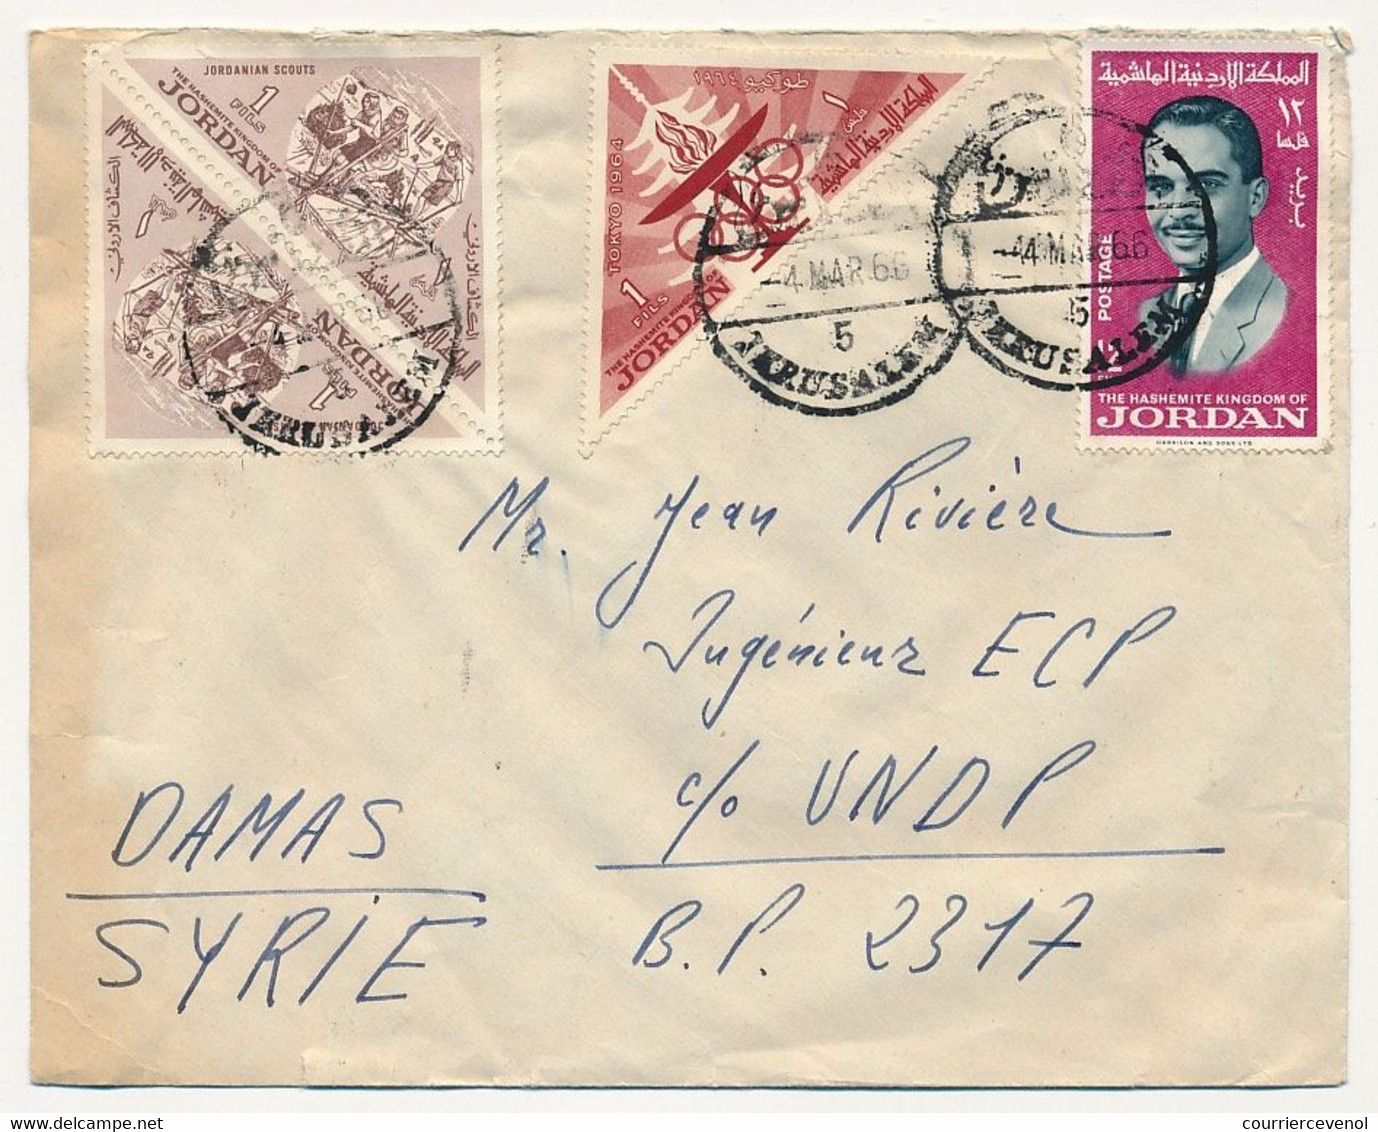 JORDANIE - Enveloppe Affr. Composé - 4 Mars 1966 - JERUSALEM - Jordan